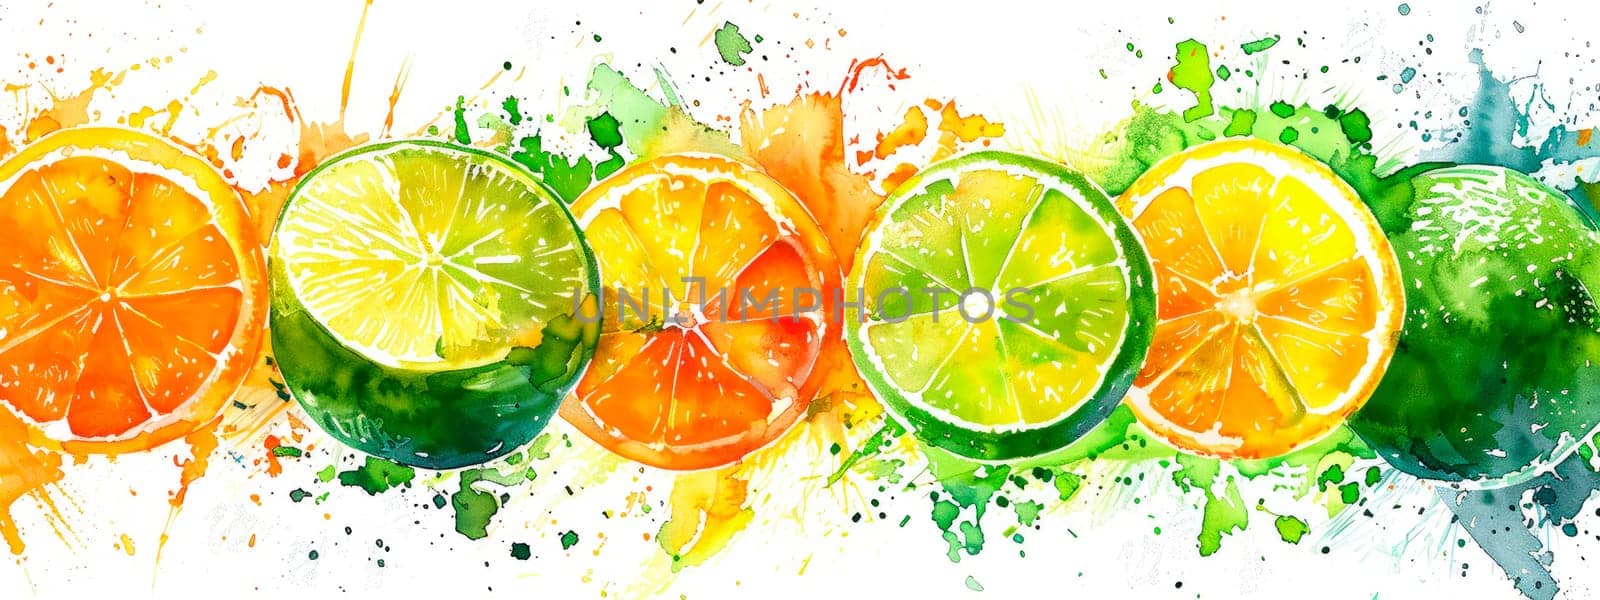 drawing watercolor citrus fruits. selective focus. by yanadjana